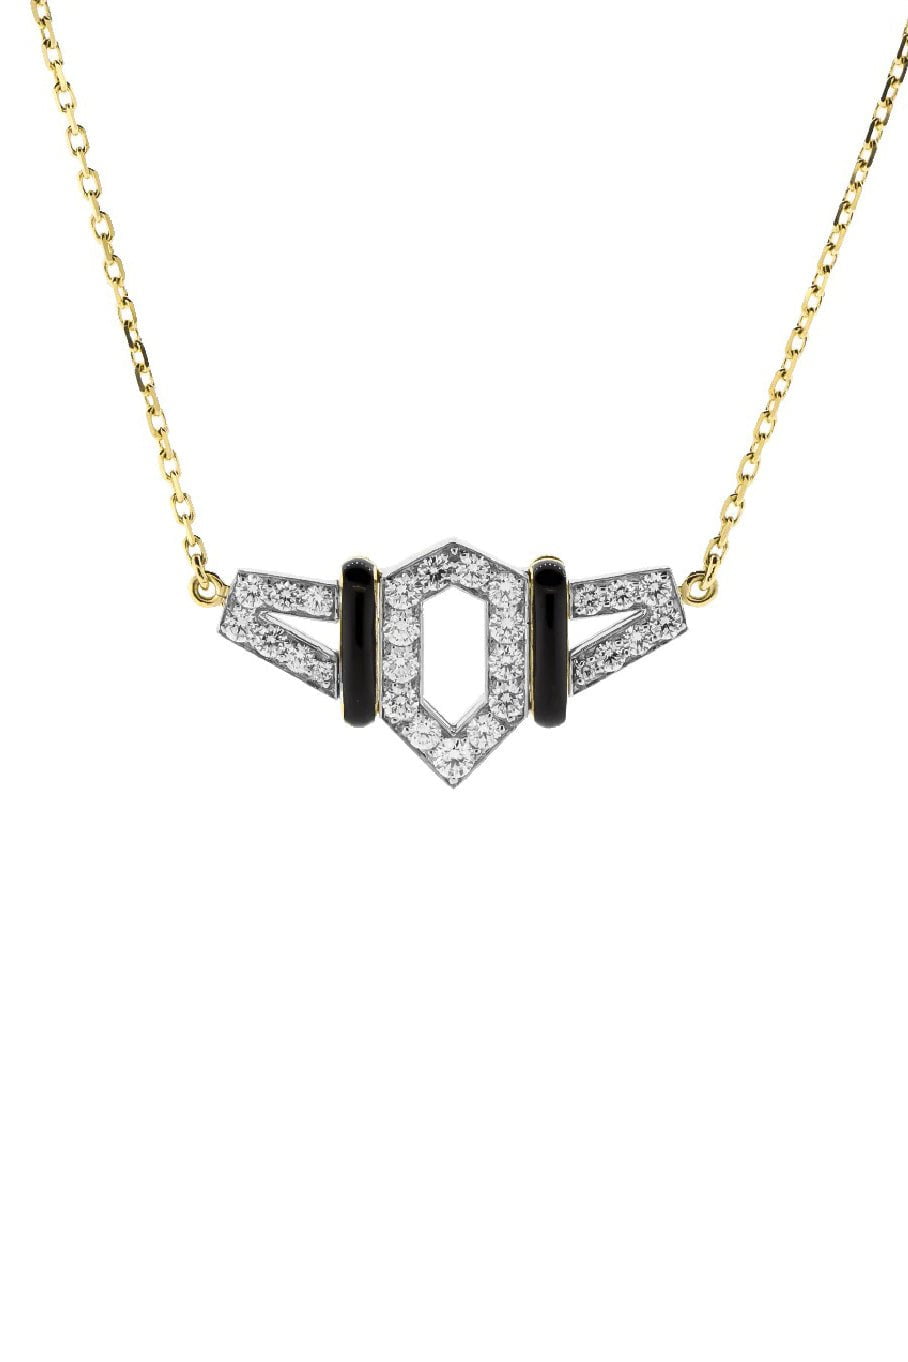 DAVID WEBB-Black Enamel And Diamond Flight Necklace-YELLOW GOLD